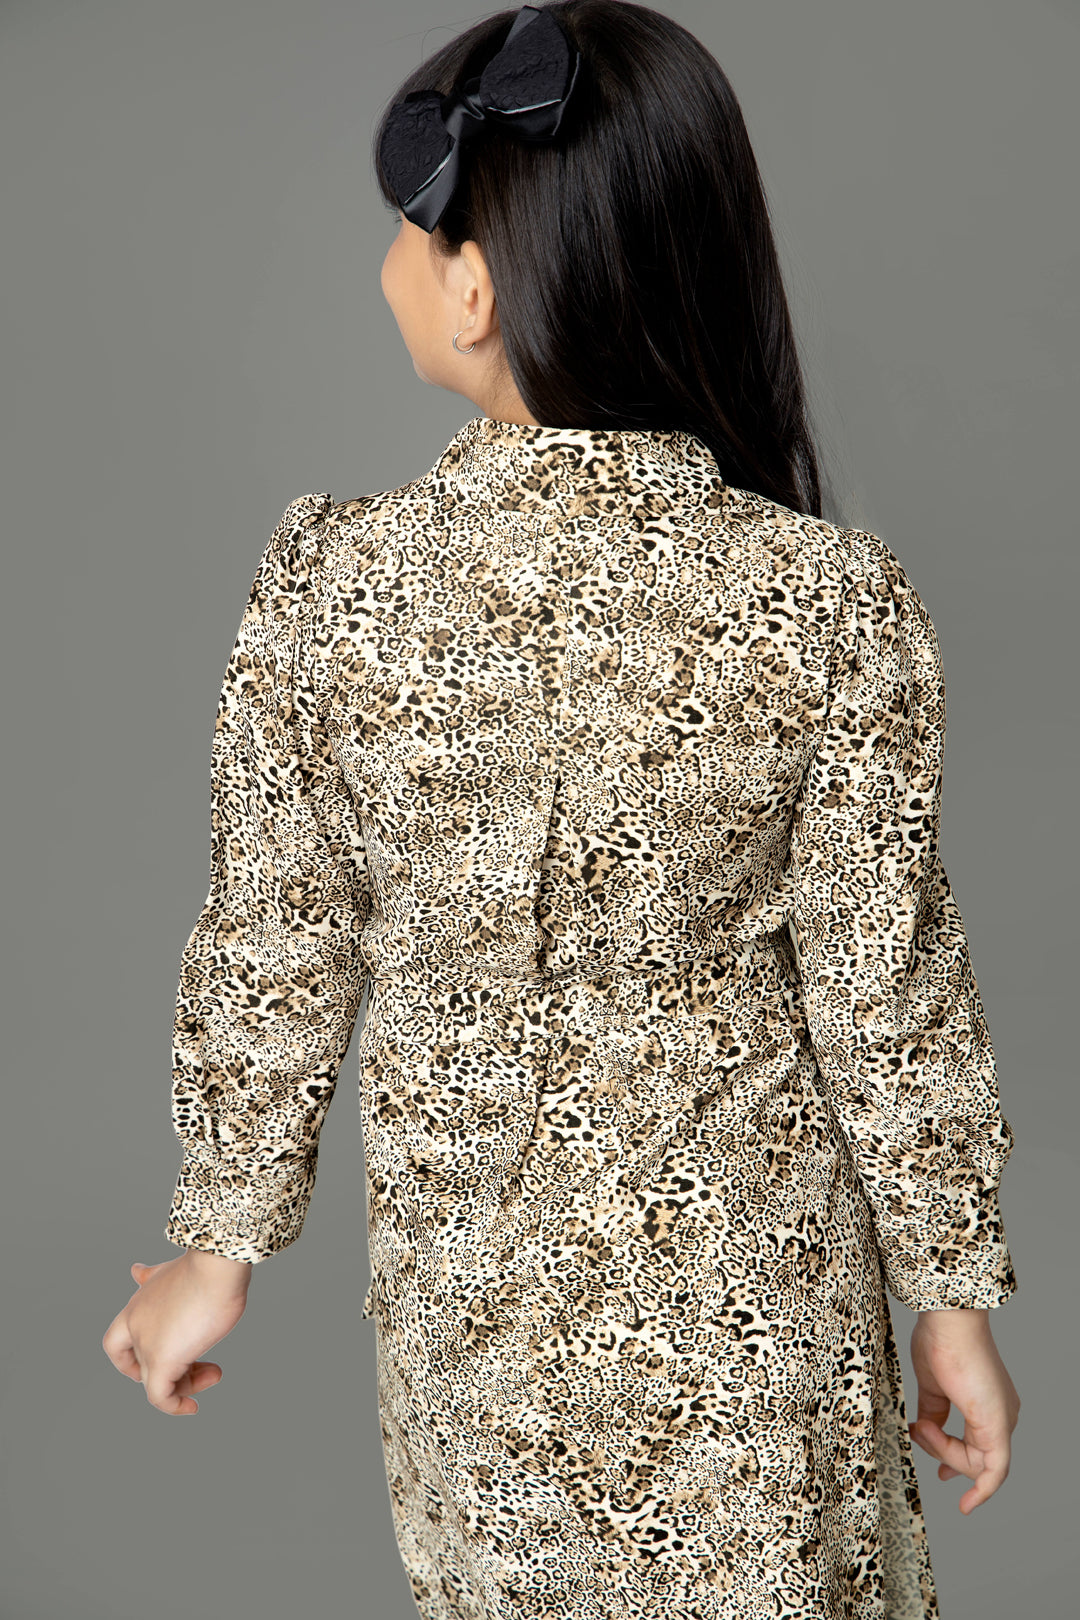 Leopard Print Wrap V Neck Dress For Girls